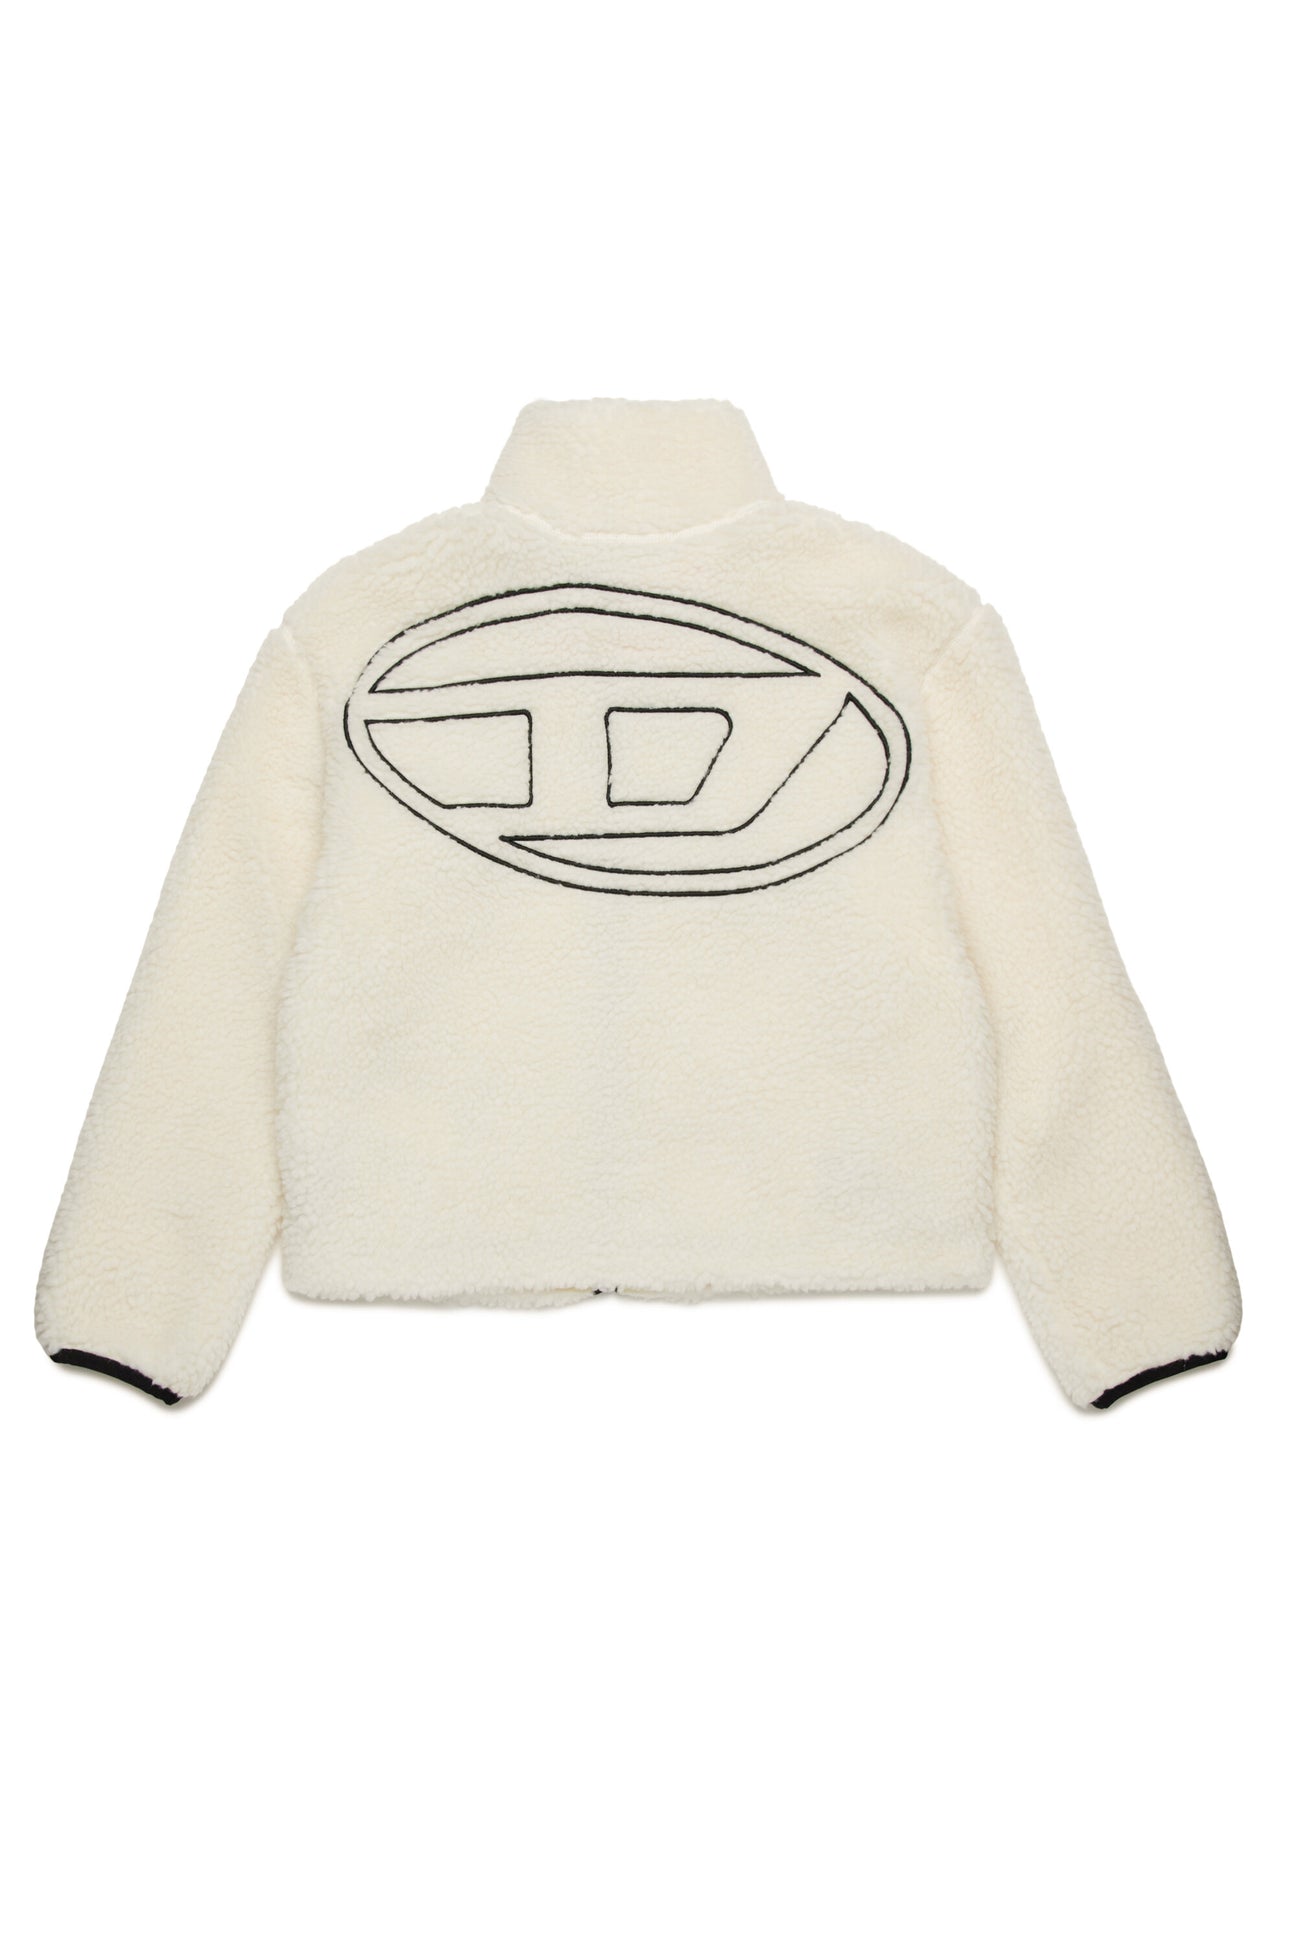 Oval D branded teddy jacket Oval D branded teddy jacket